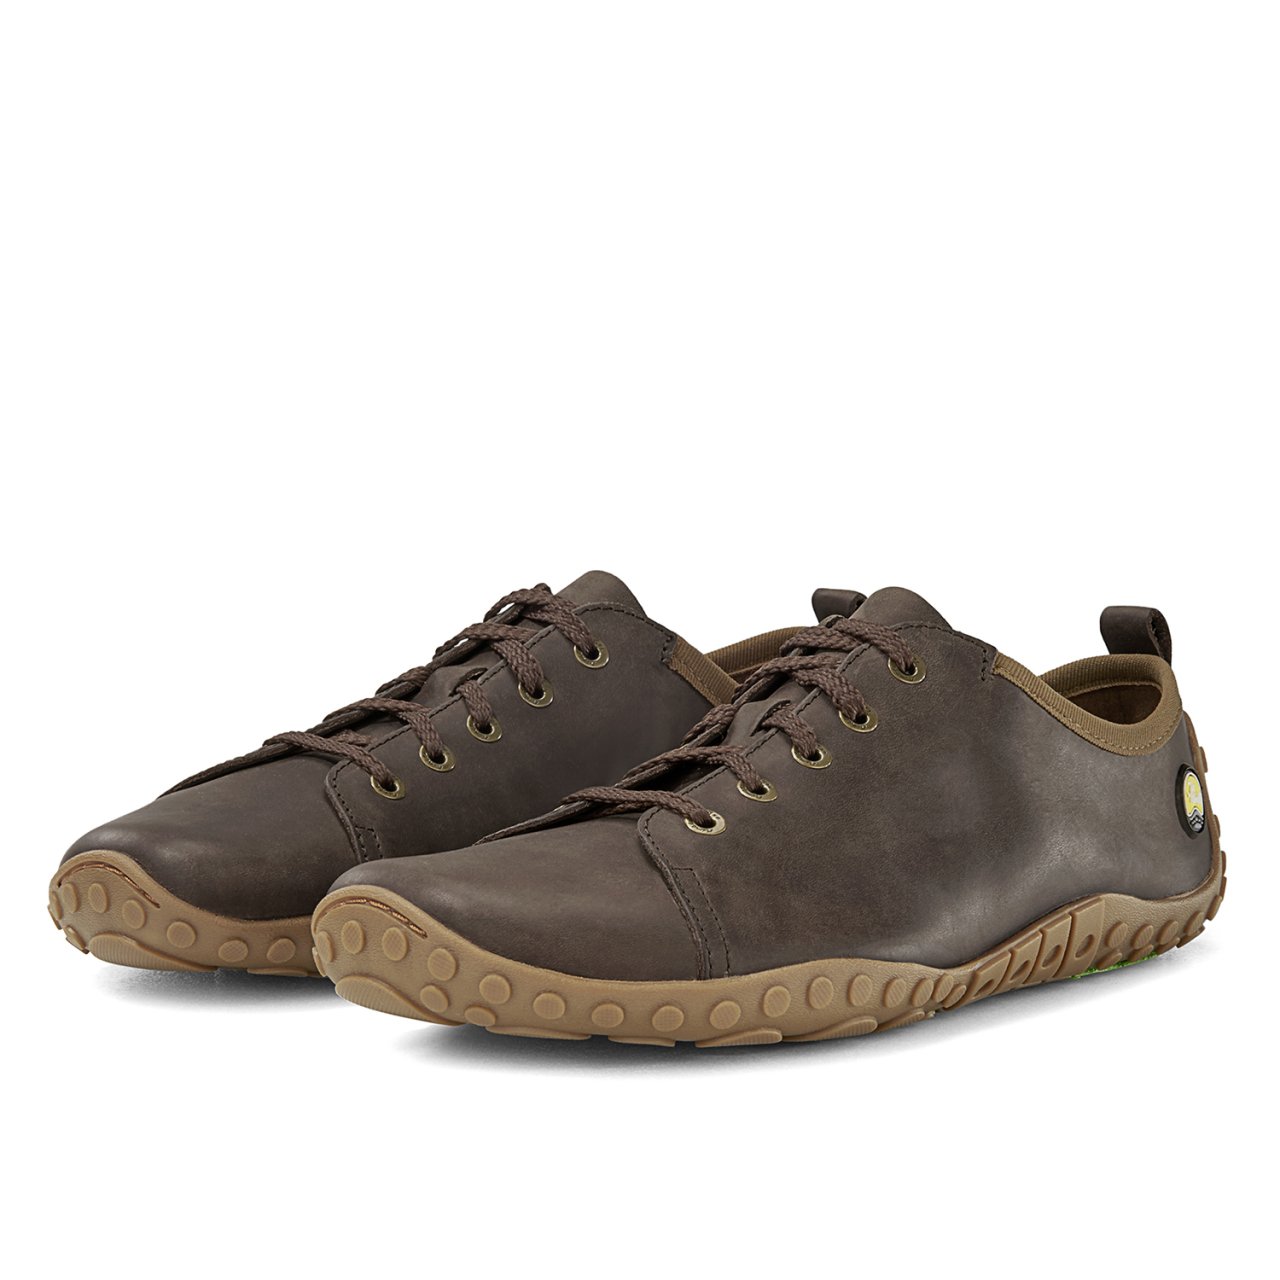 Joe Nimble [m] RelaxToes Leather - dunkel brown | 1719-289 |